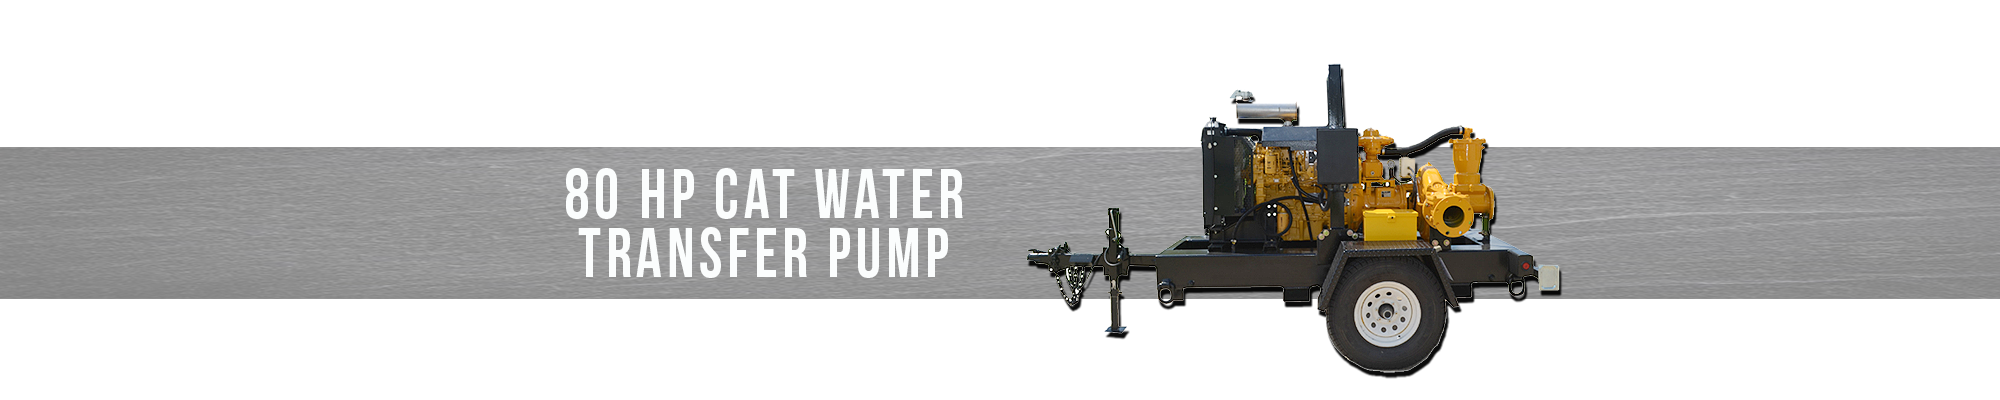 80 HP CAT Water Transfer Pump